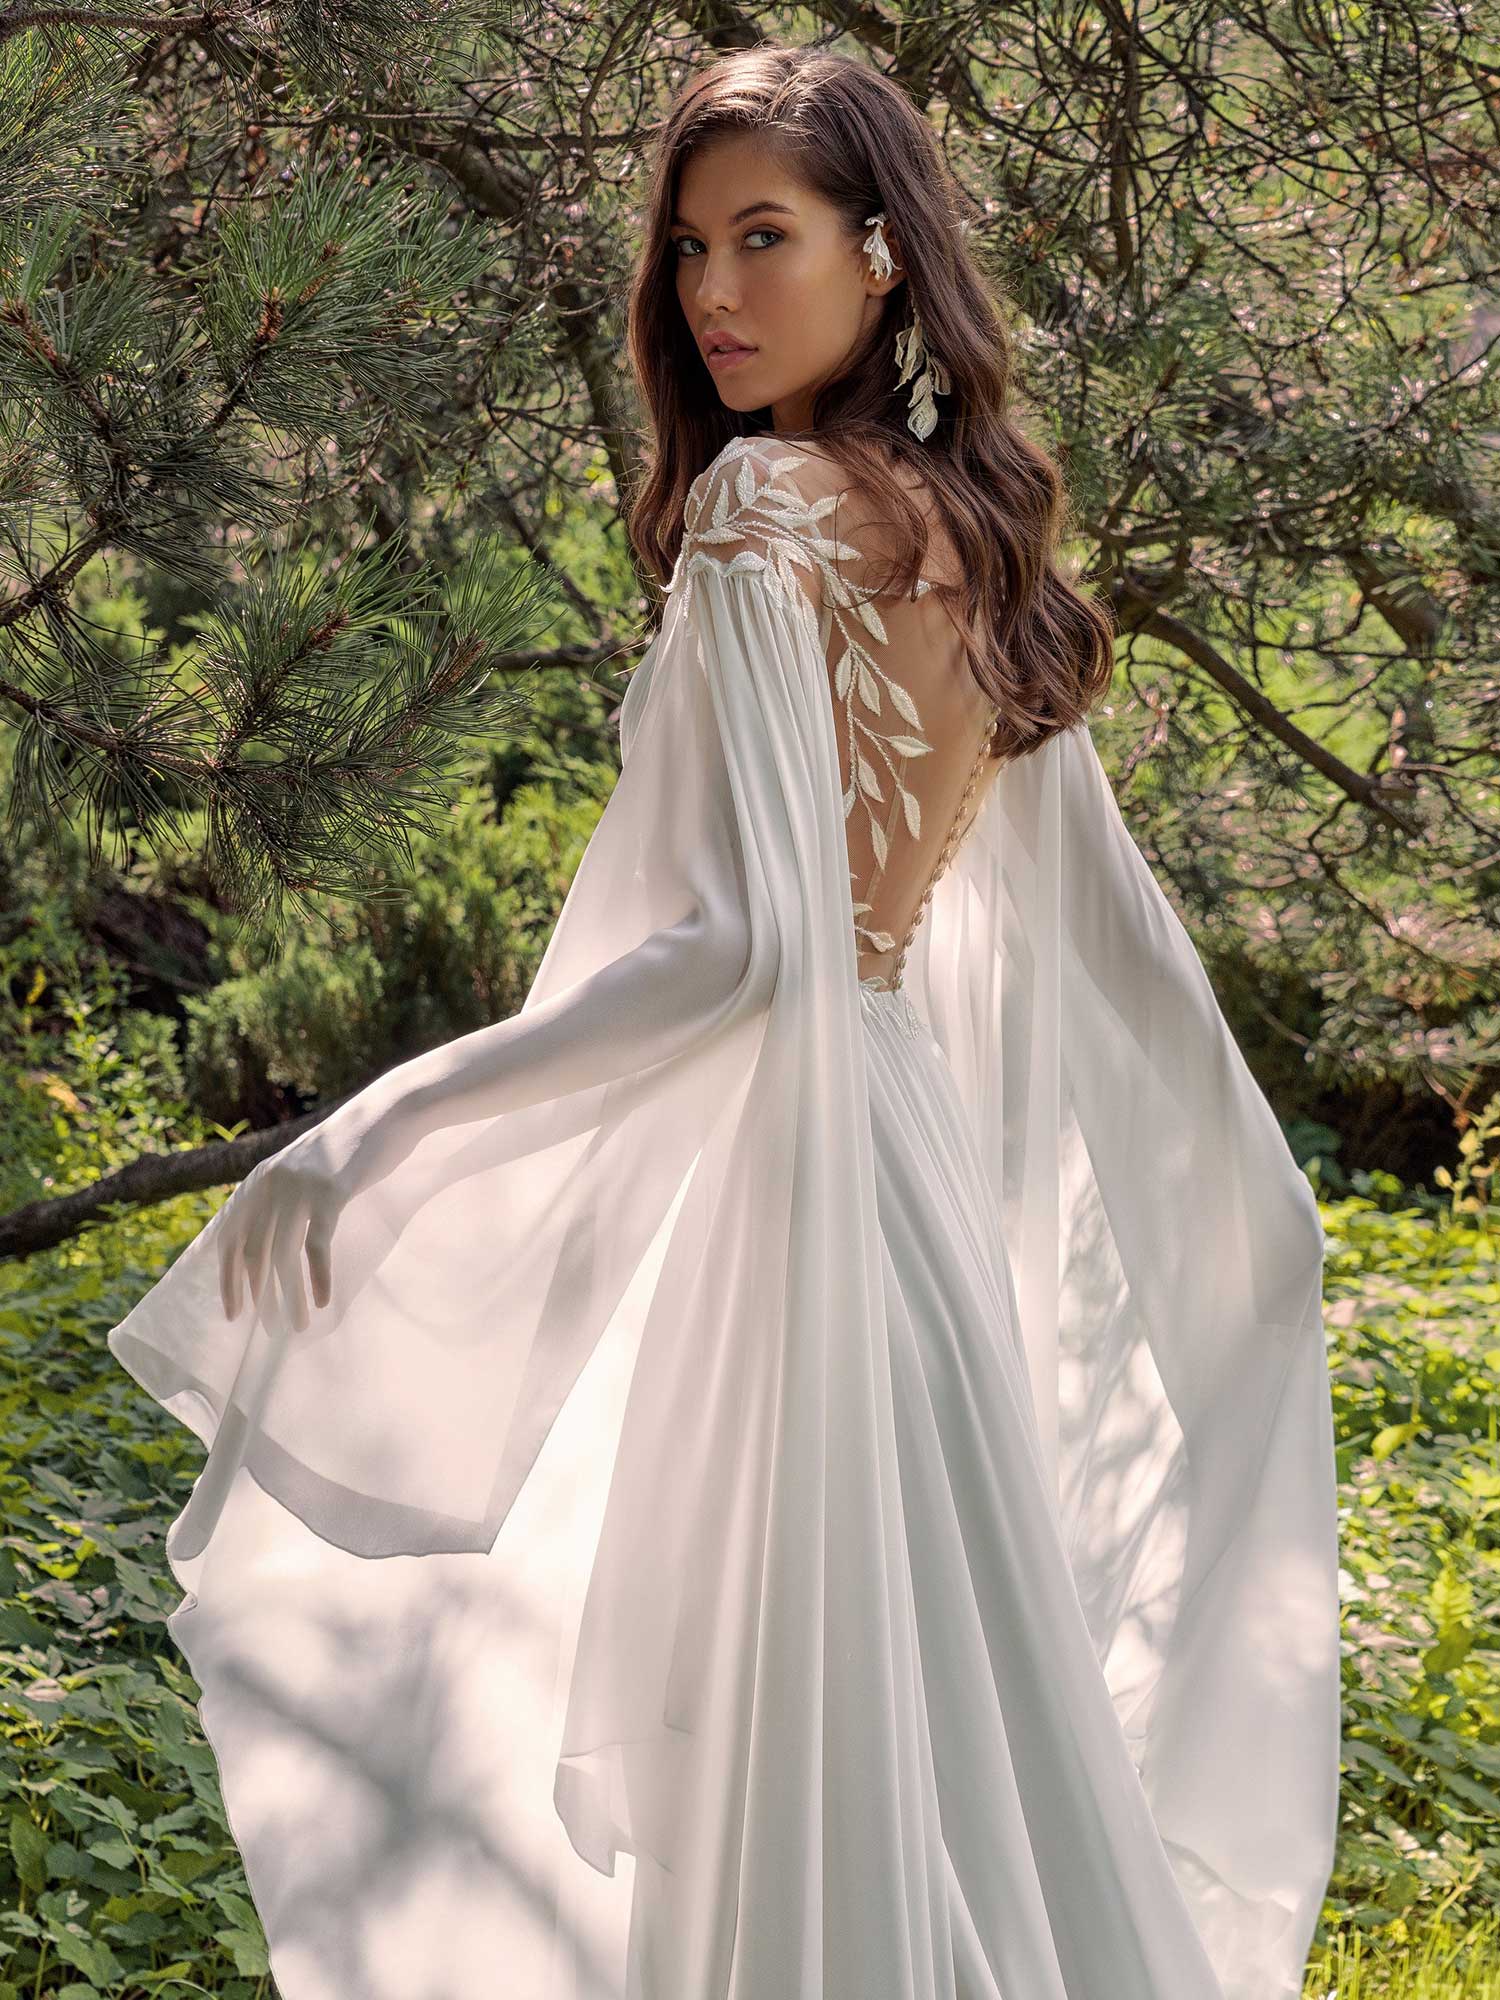 Chiffon sheath wedding dress with cape sleeves